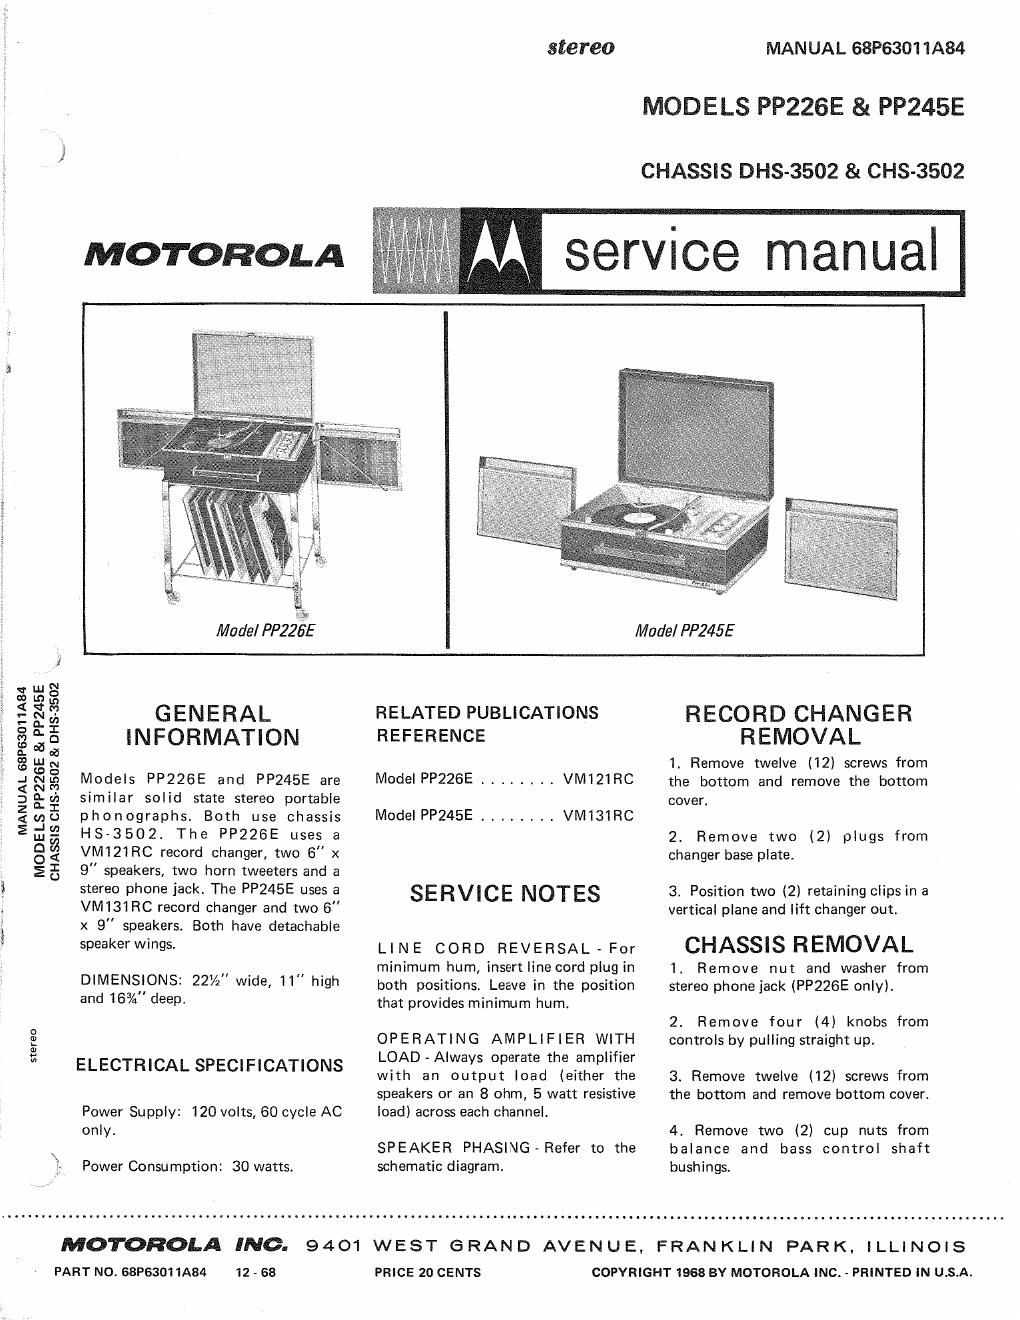 motorola pp 226 e service manual